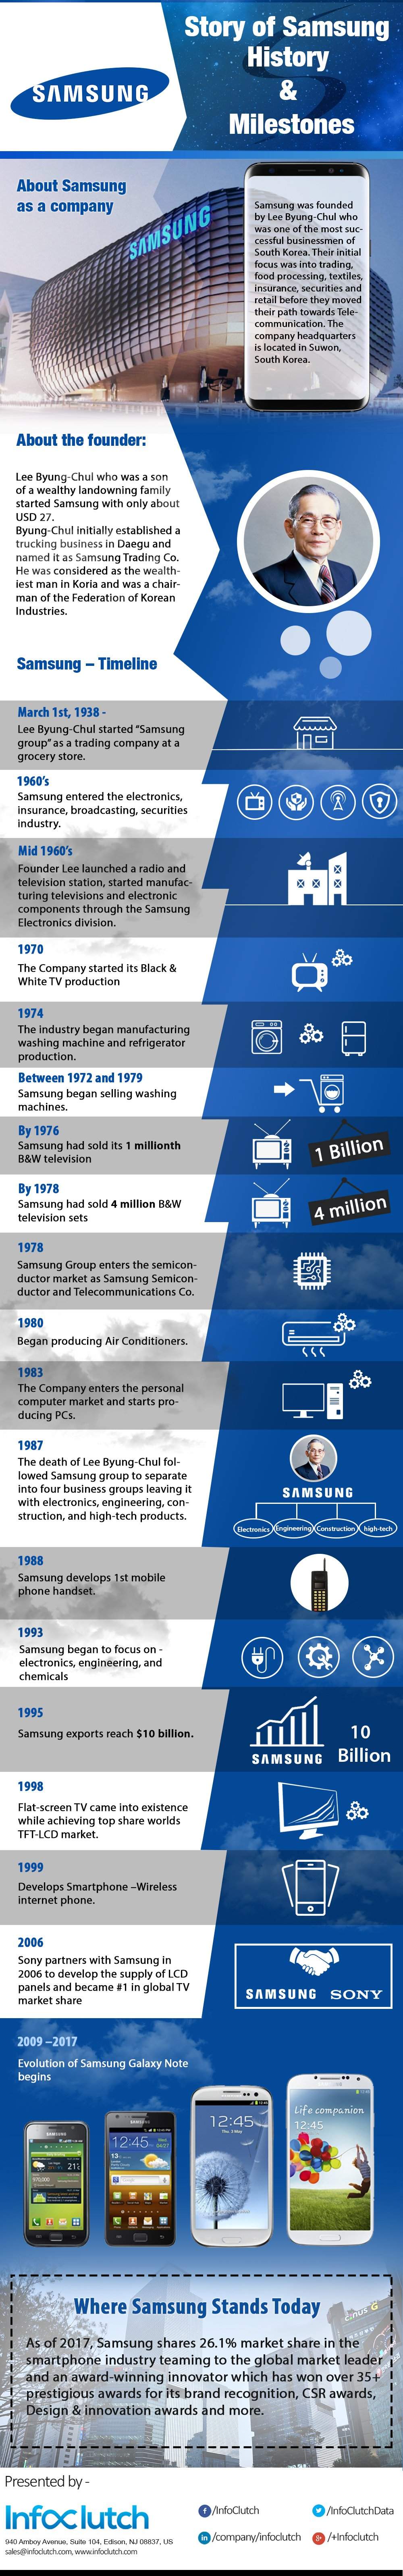 Success Story of Samsung